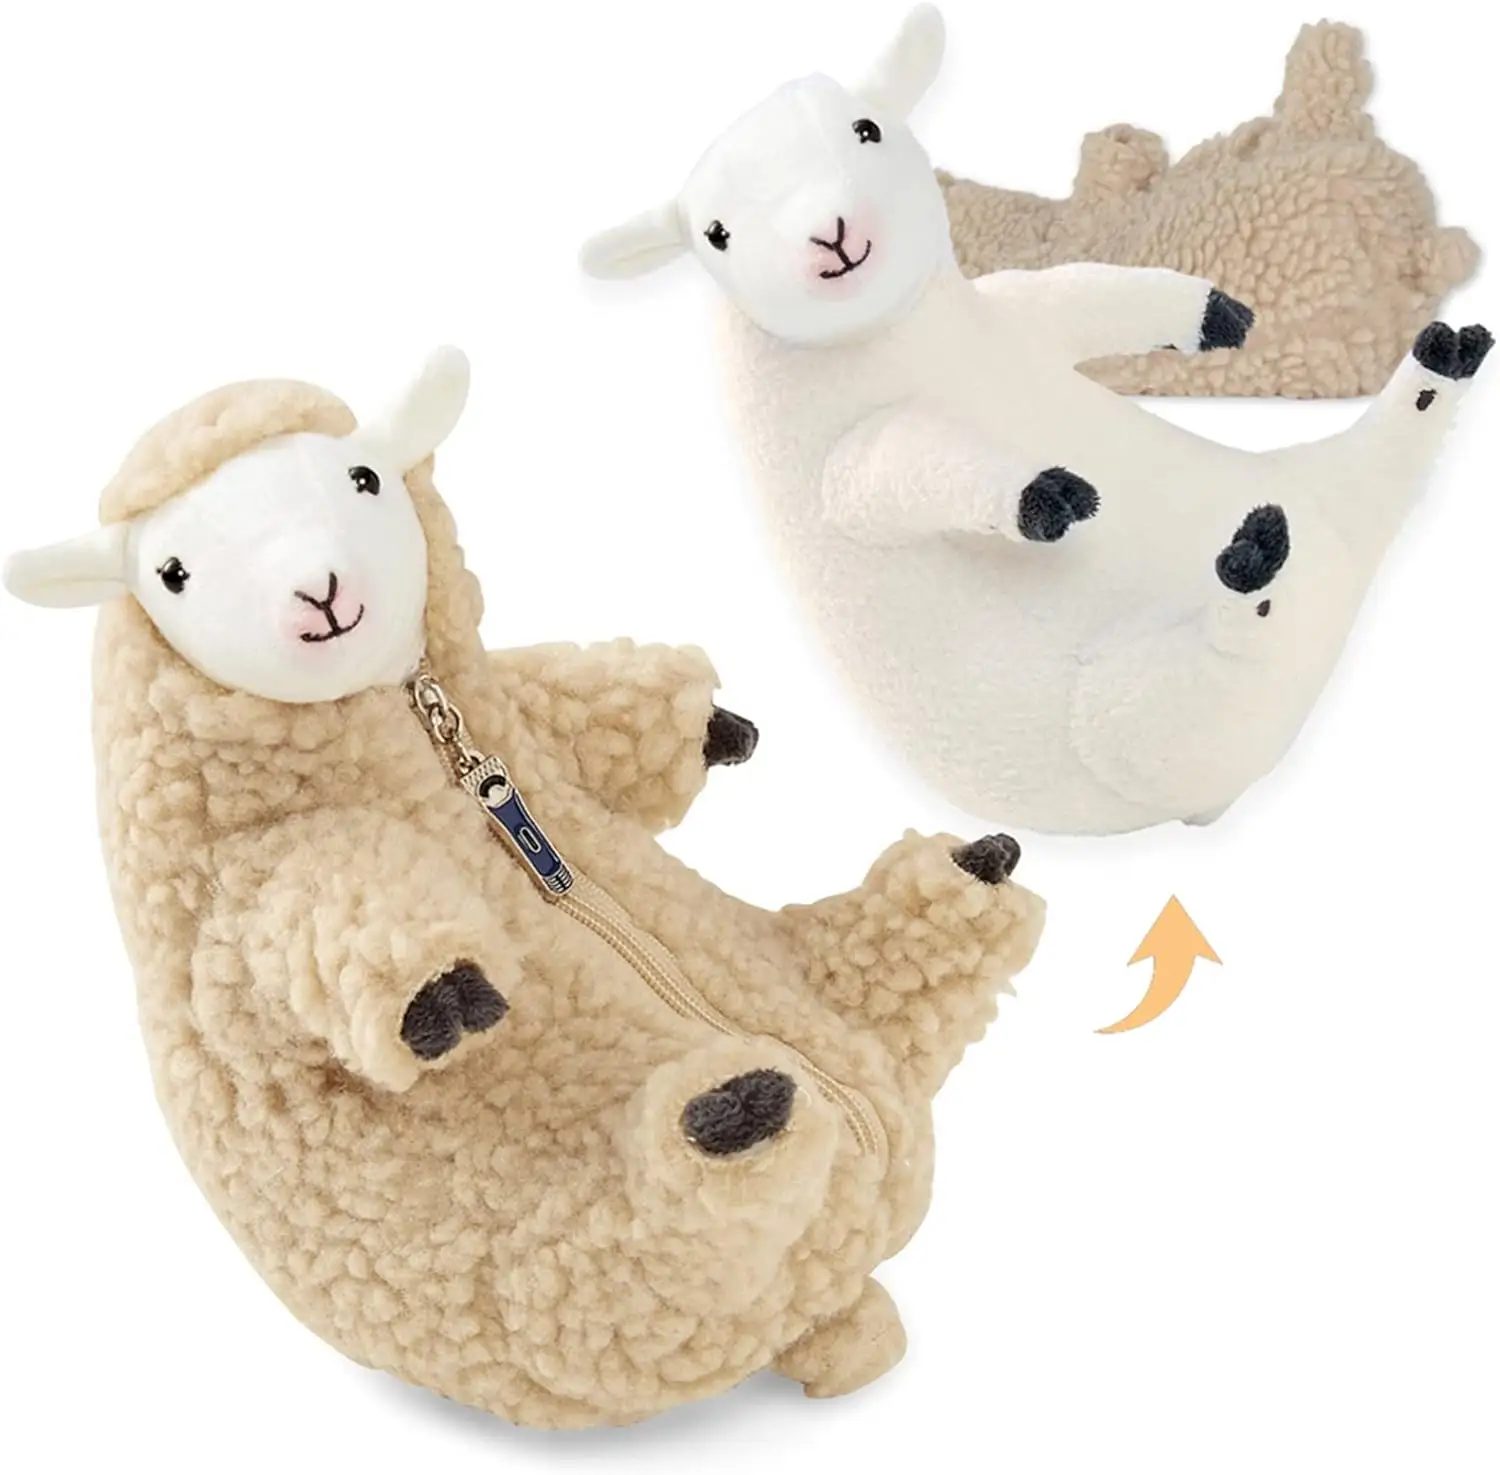 Kawaii Plushies Shaved Sheep Funny Lamb Stuffed Animal Sleeping Pet Buddy Best Birthday Gift for Women Girls Boys Teens